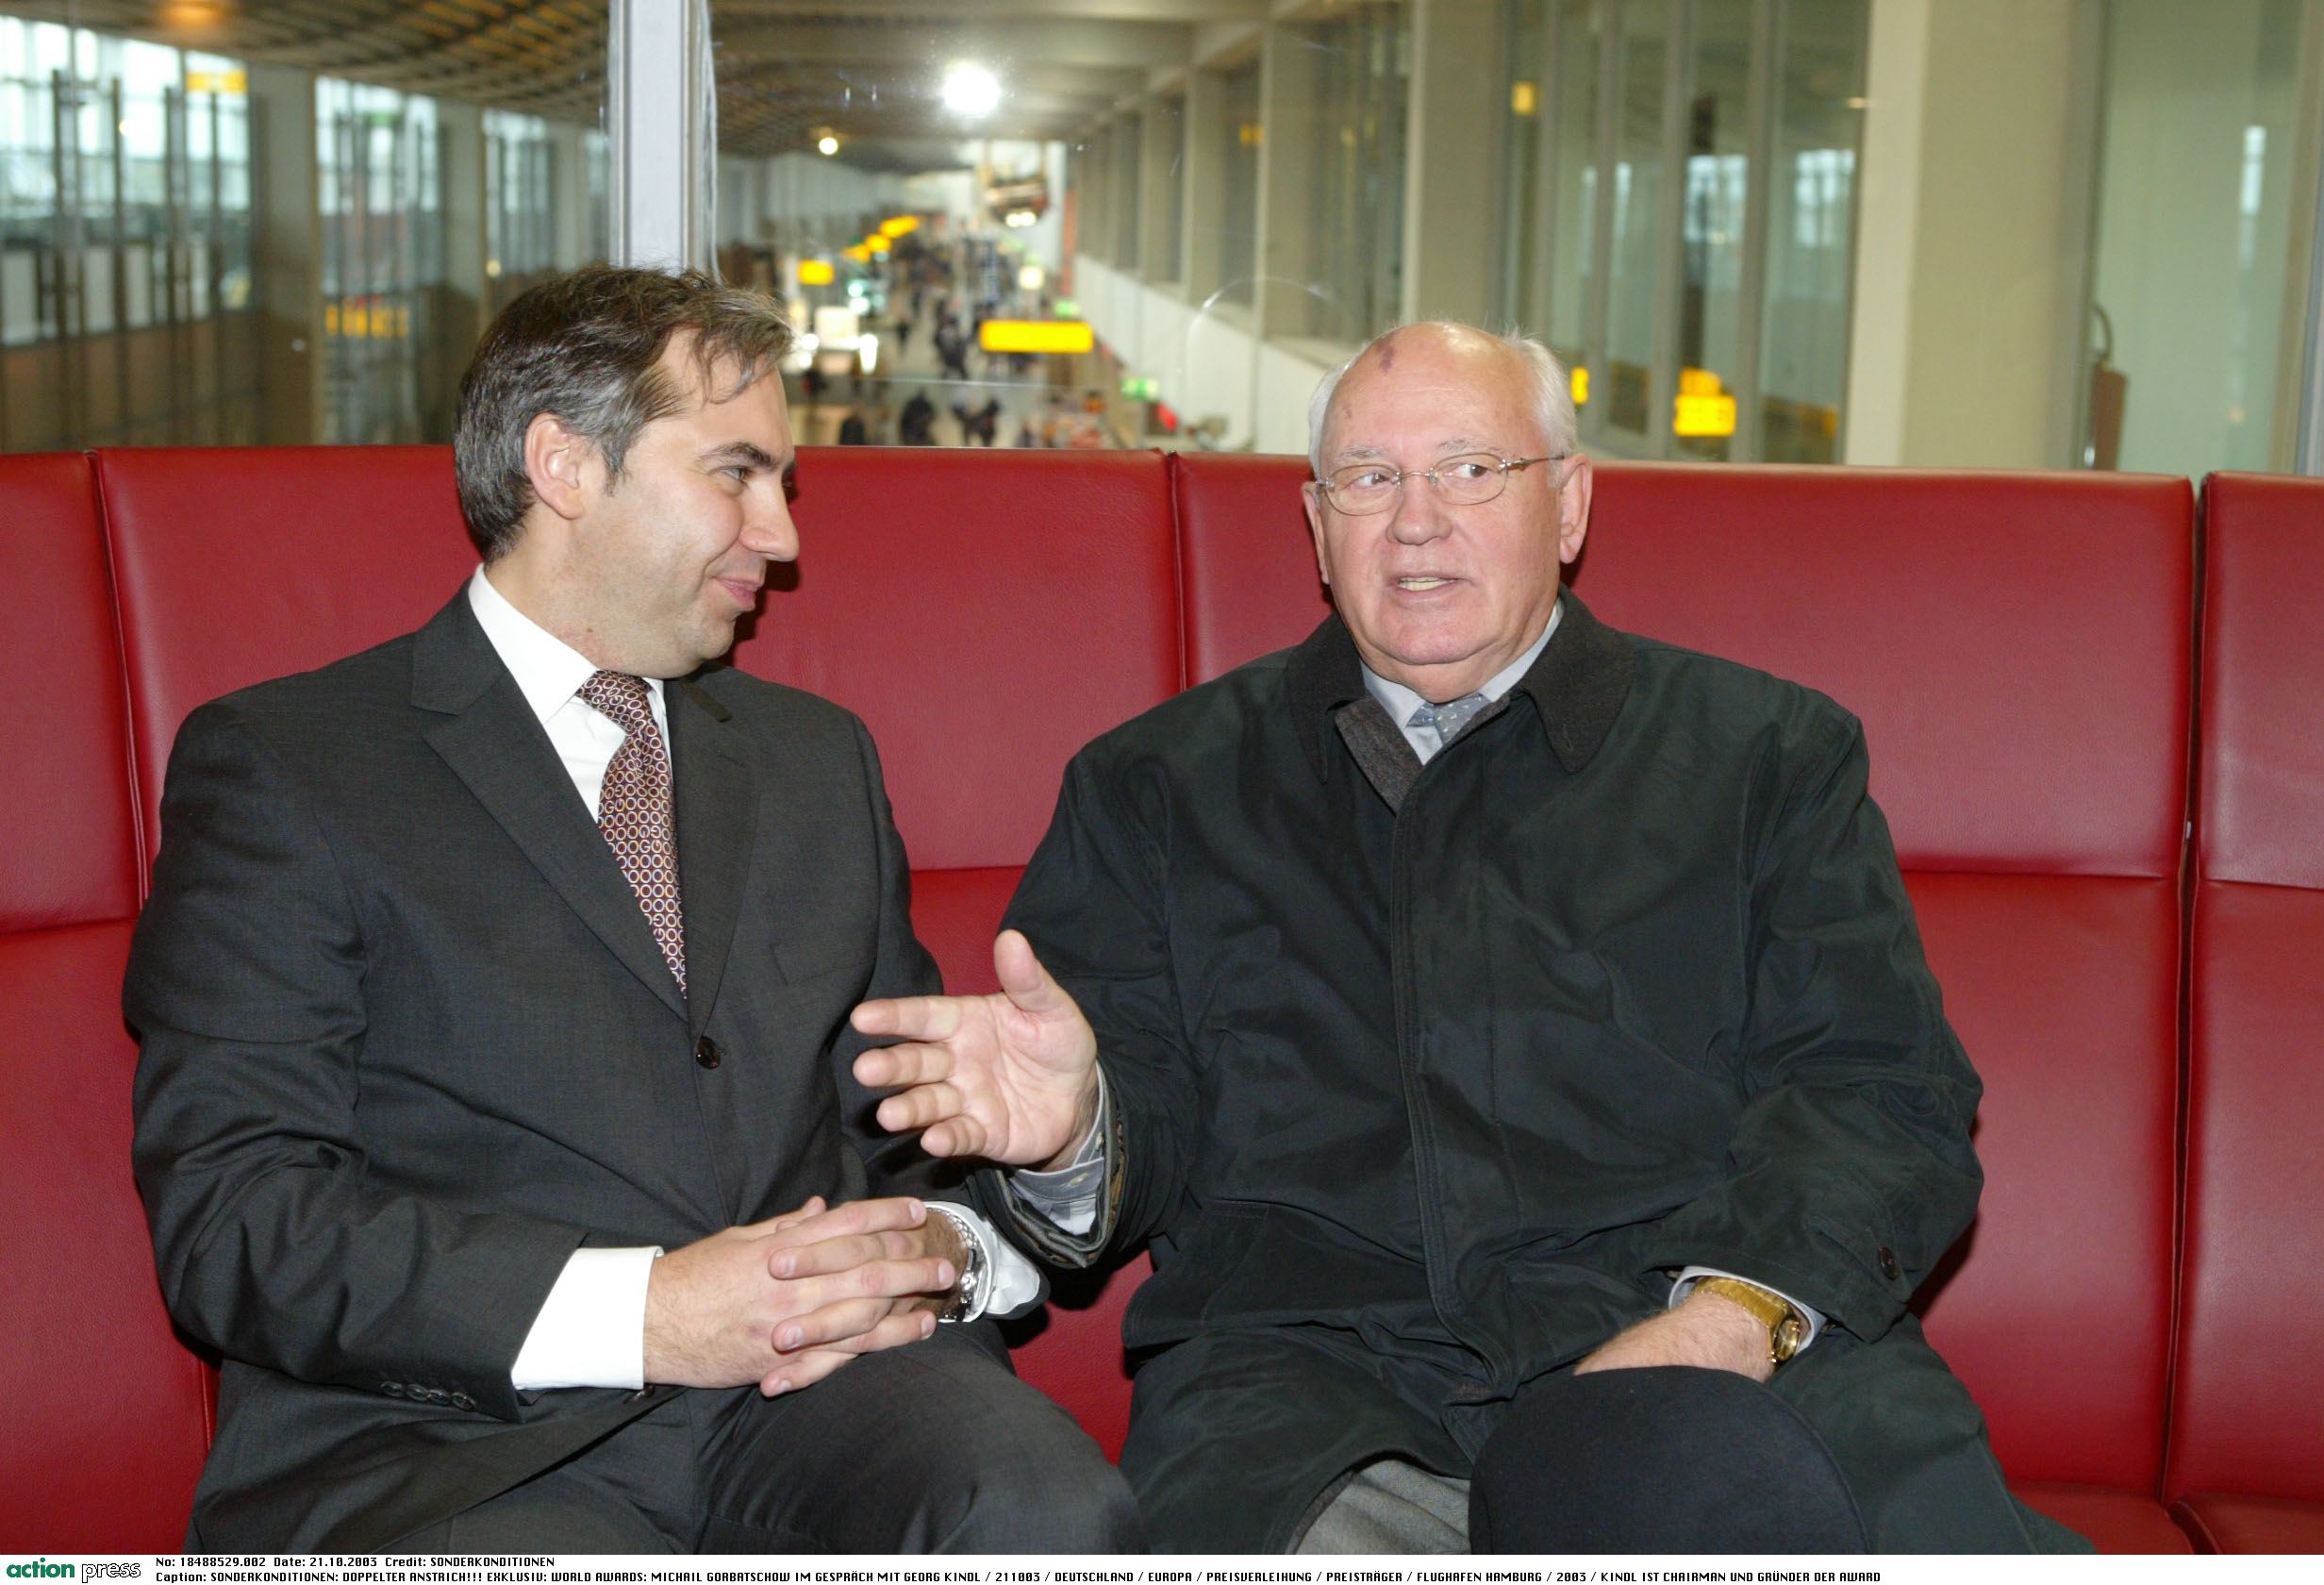 Good friends: Georg Kindel and Mikhail Gorbachev